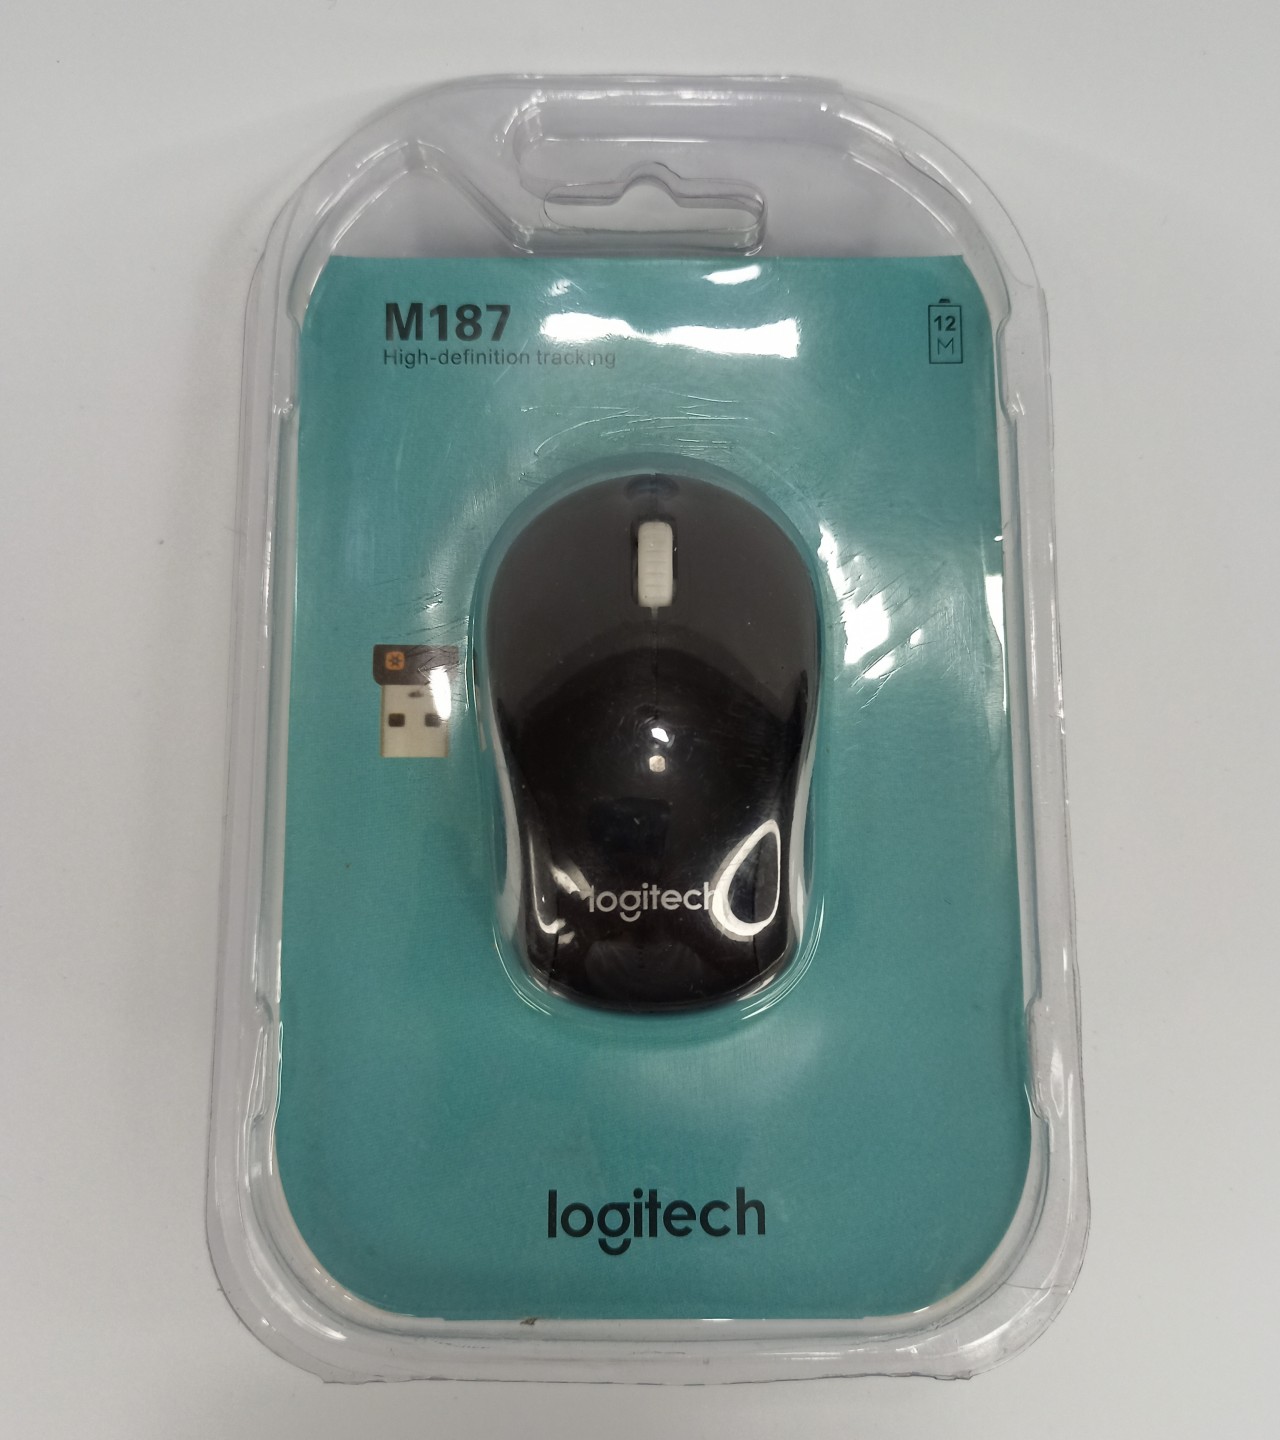 Logitech M186 Wireless Mouse High Copy